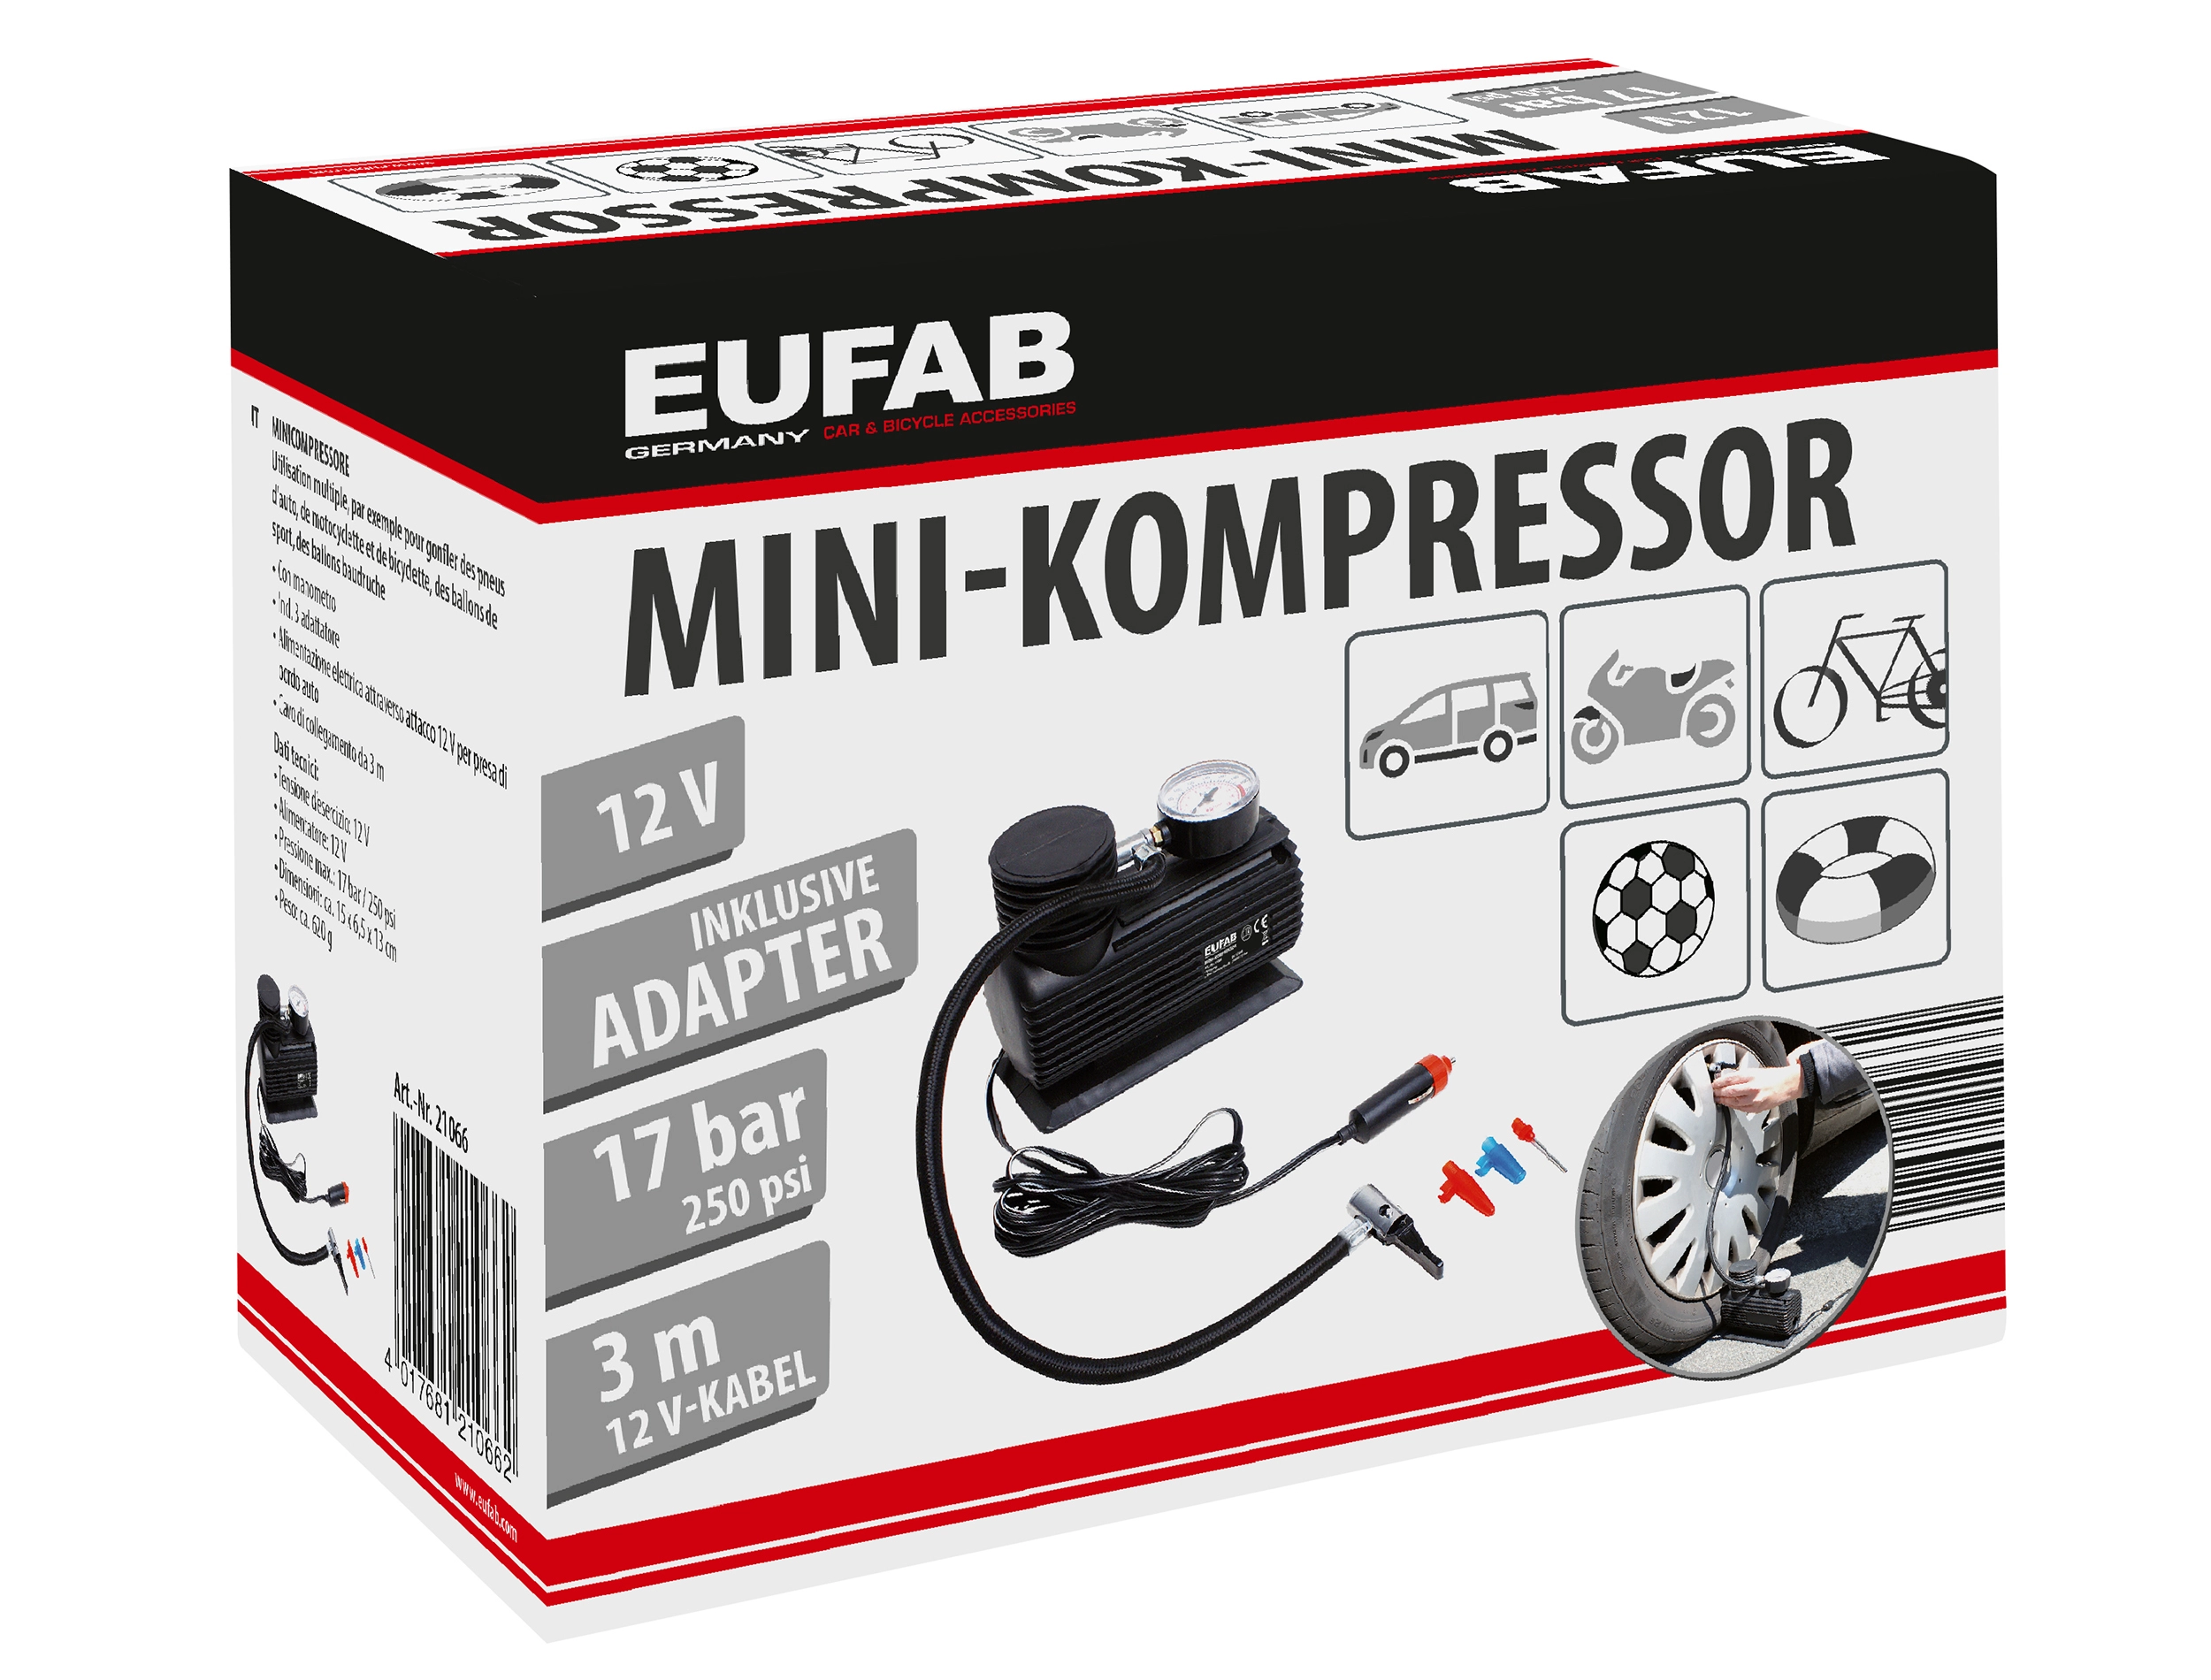 Eufab Mini-Kompressor kaufen bei OBI V 12 21066